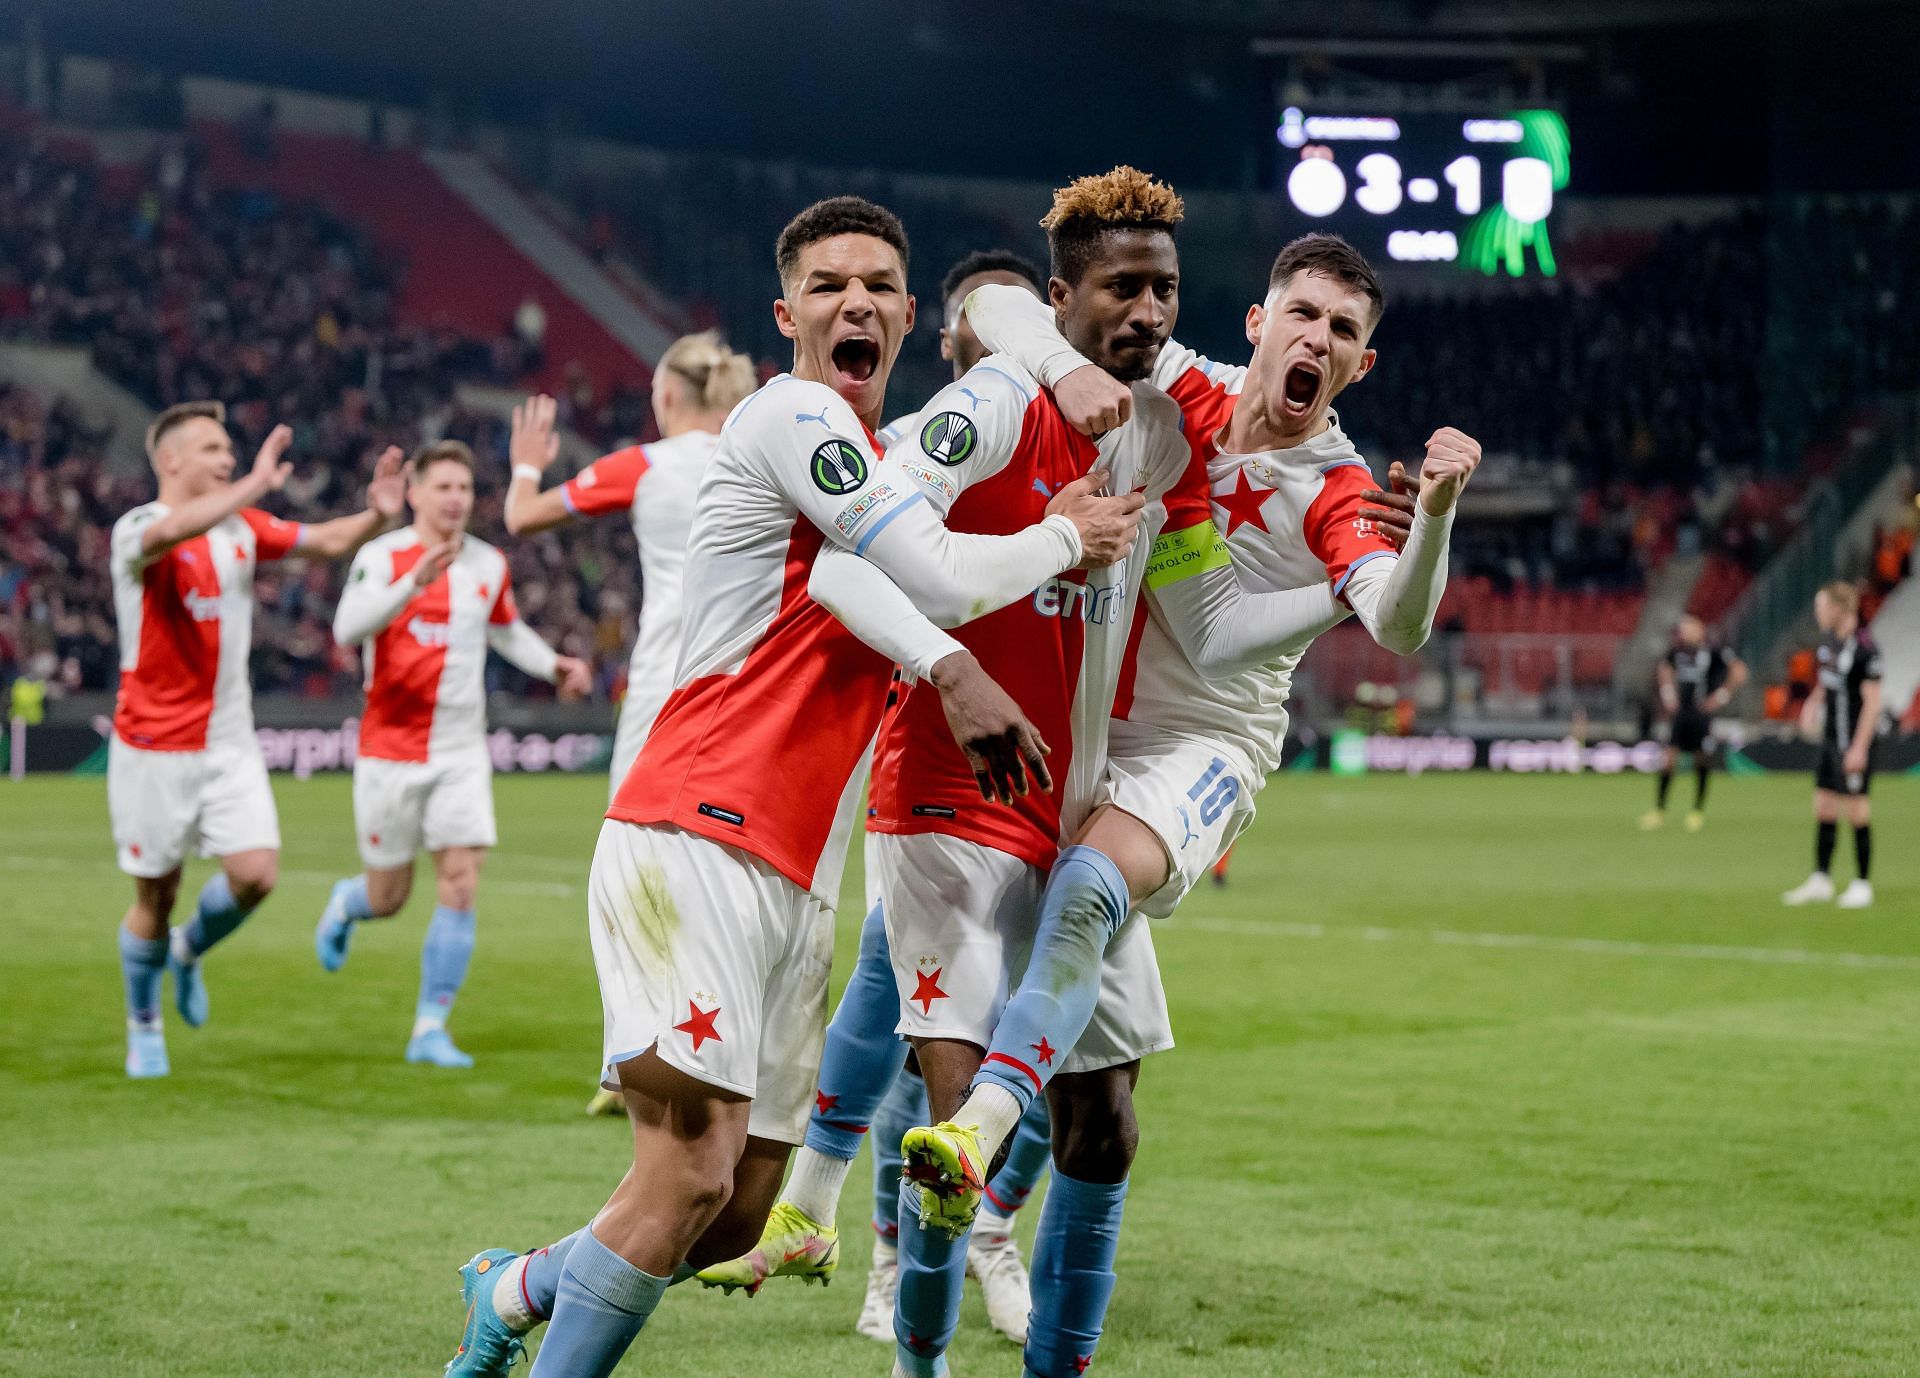 Goals and Highlights Servette 0-2 Slavia Prague in Europa League